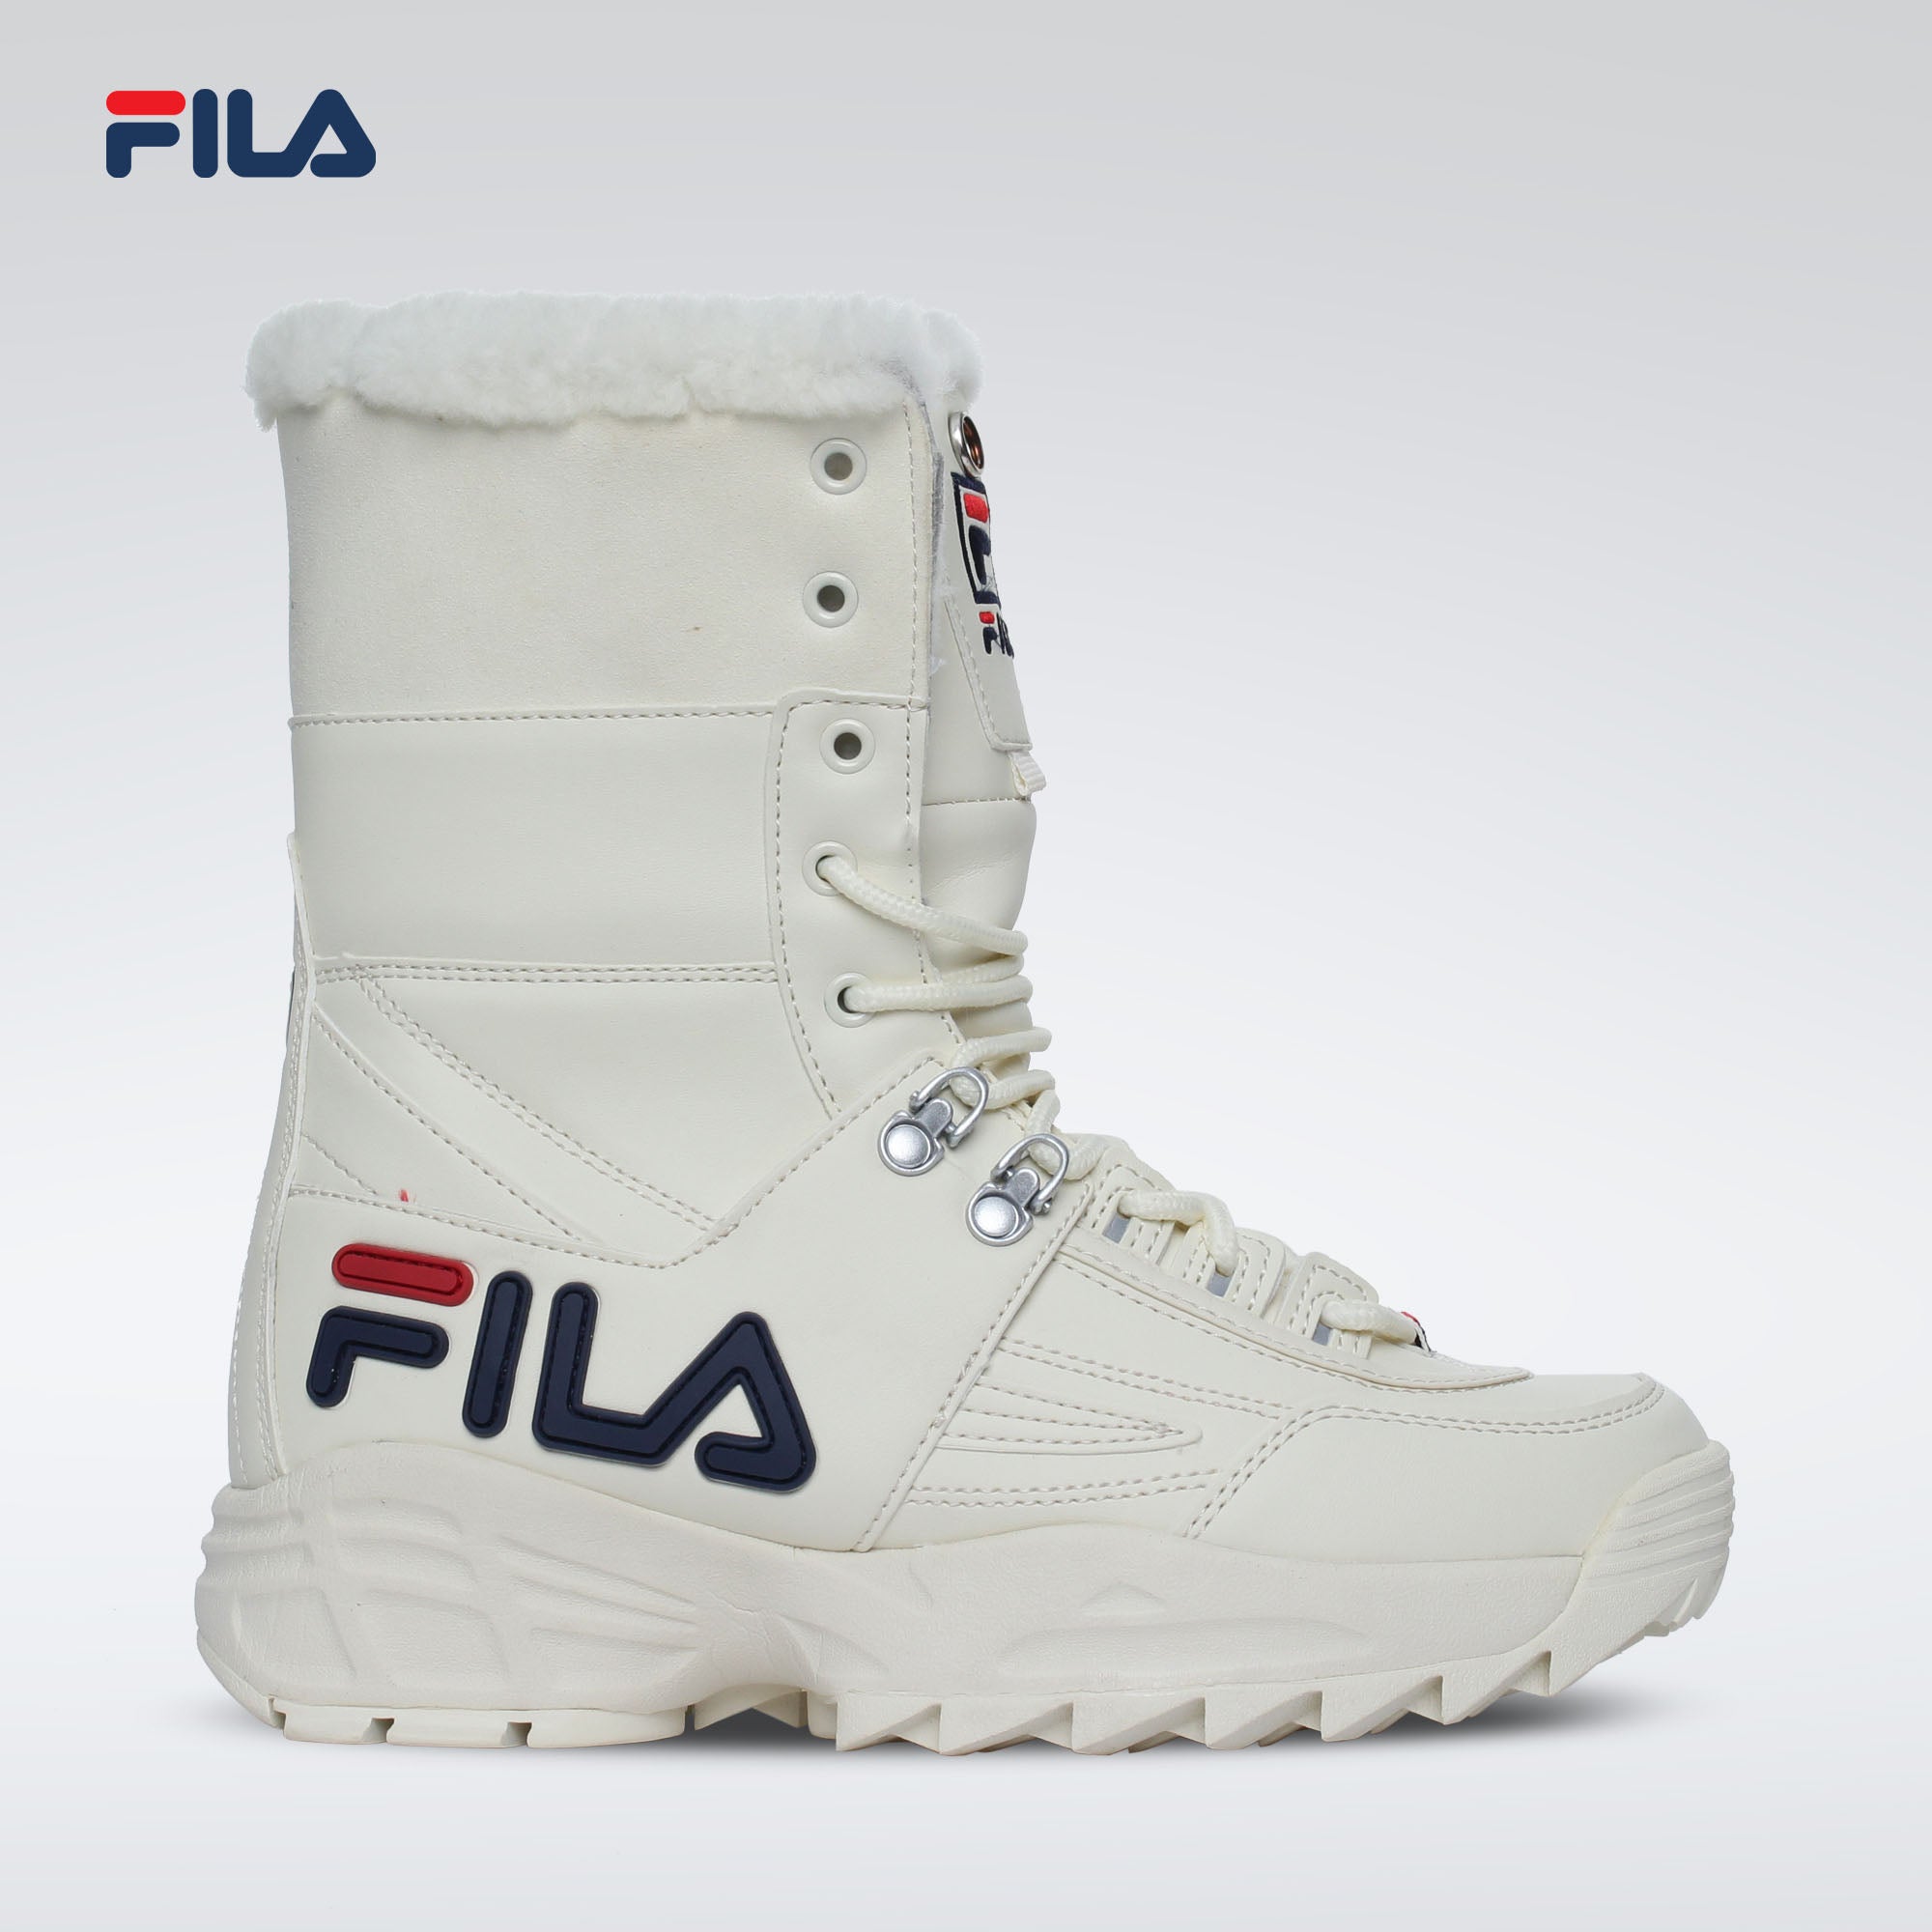 fila women's snow boots